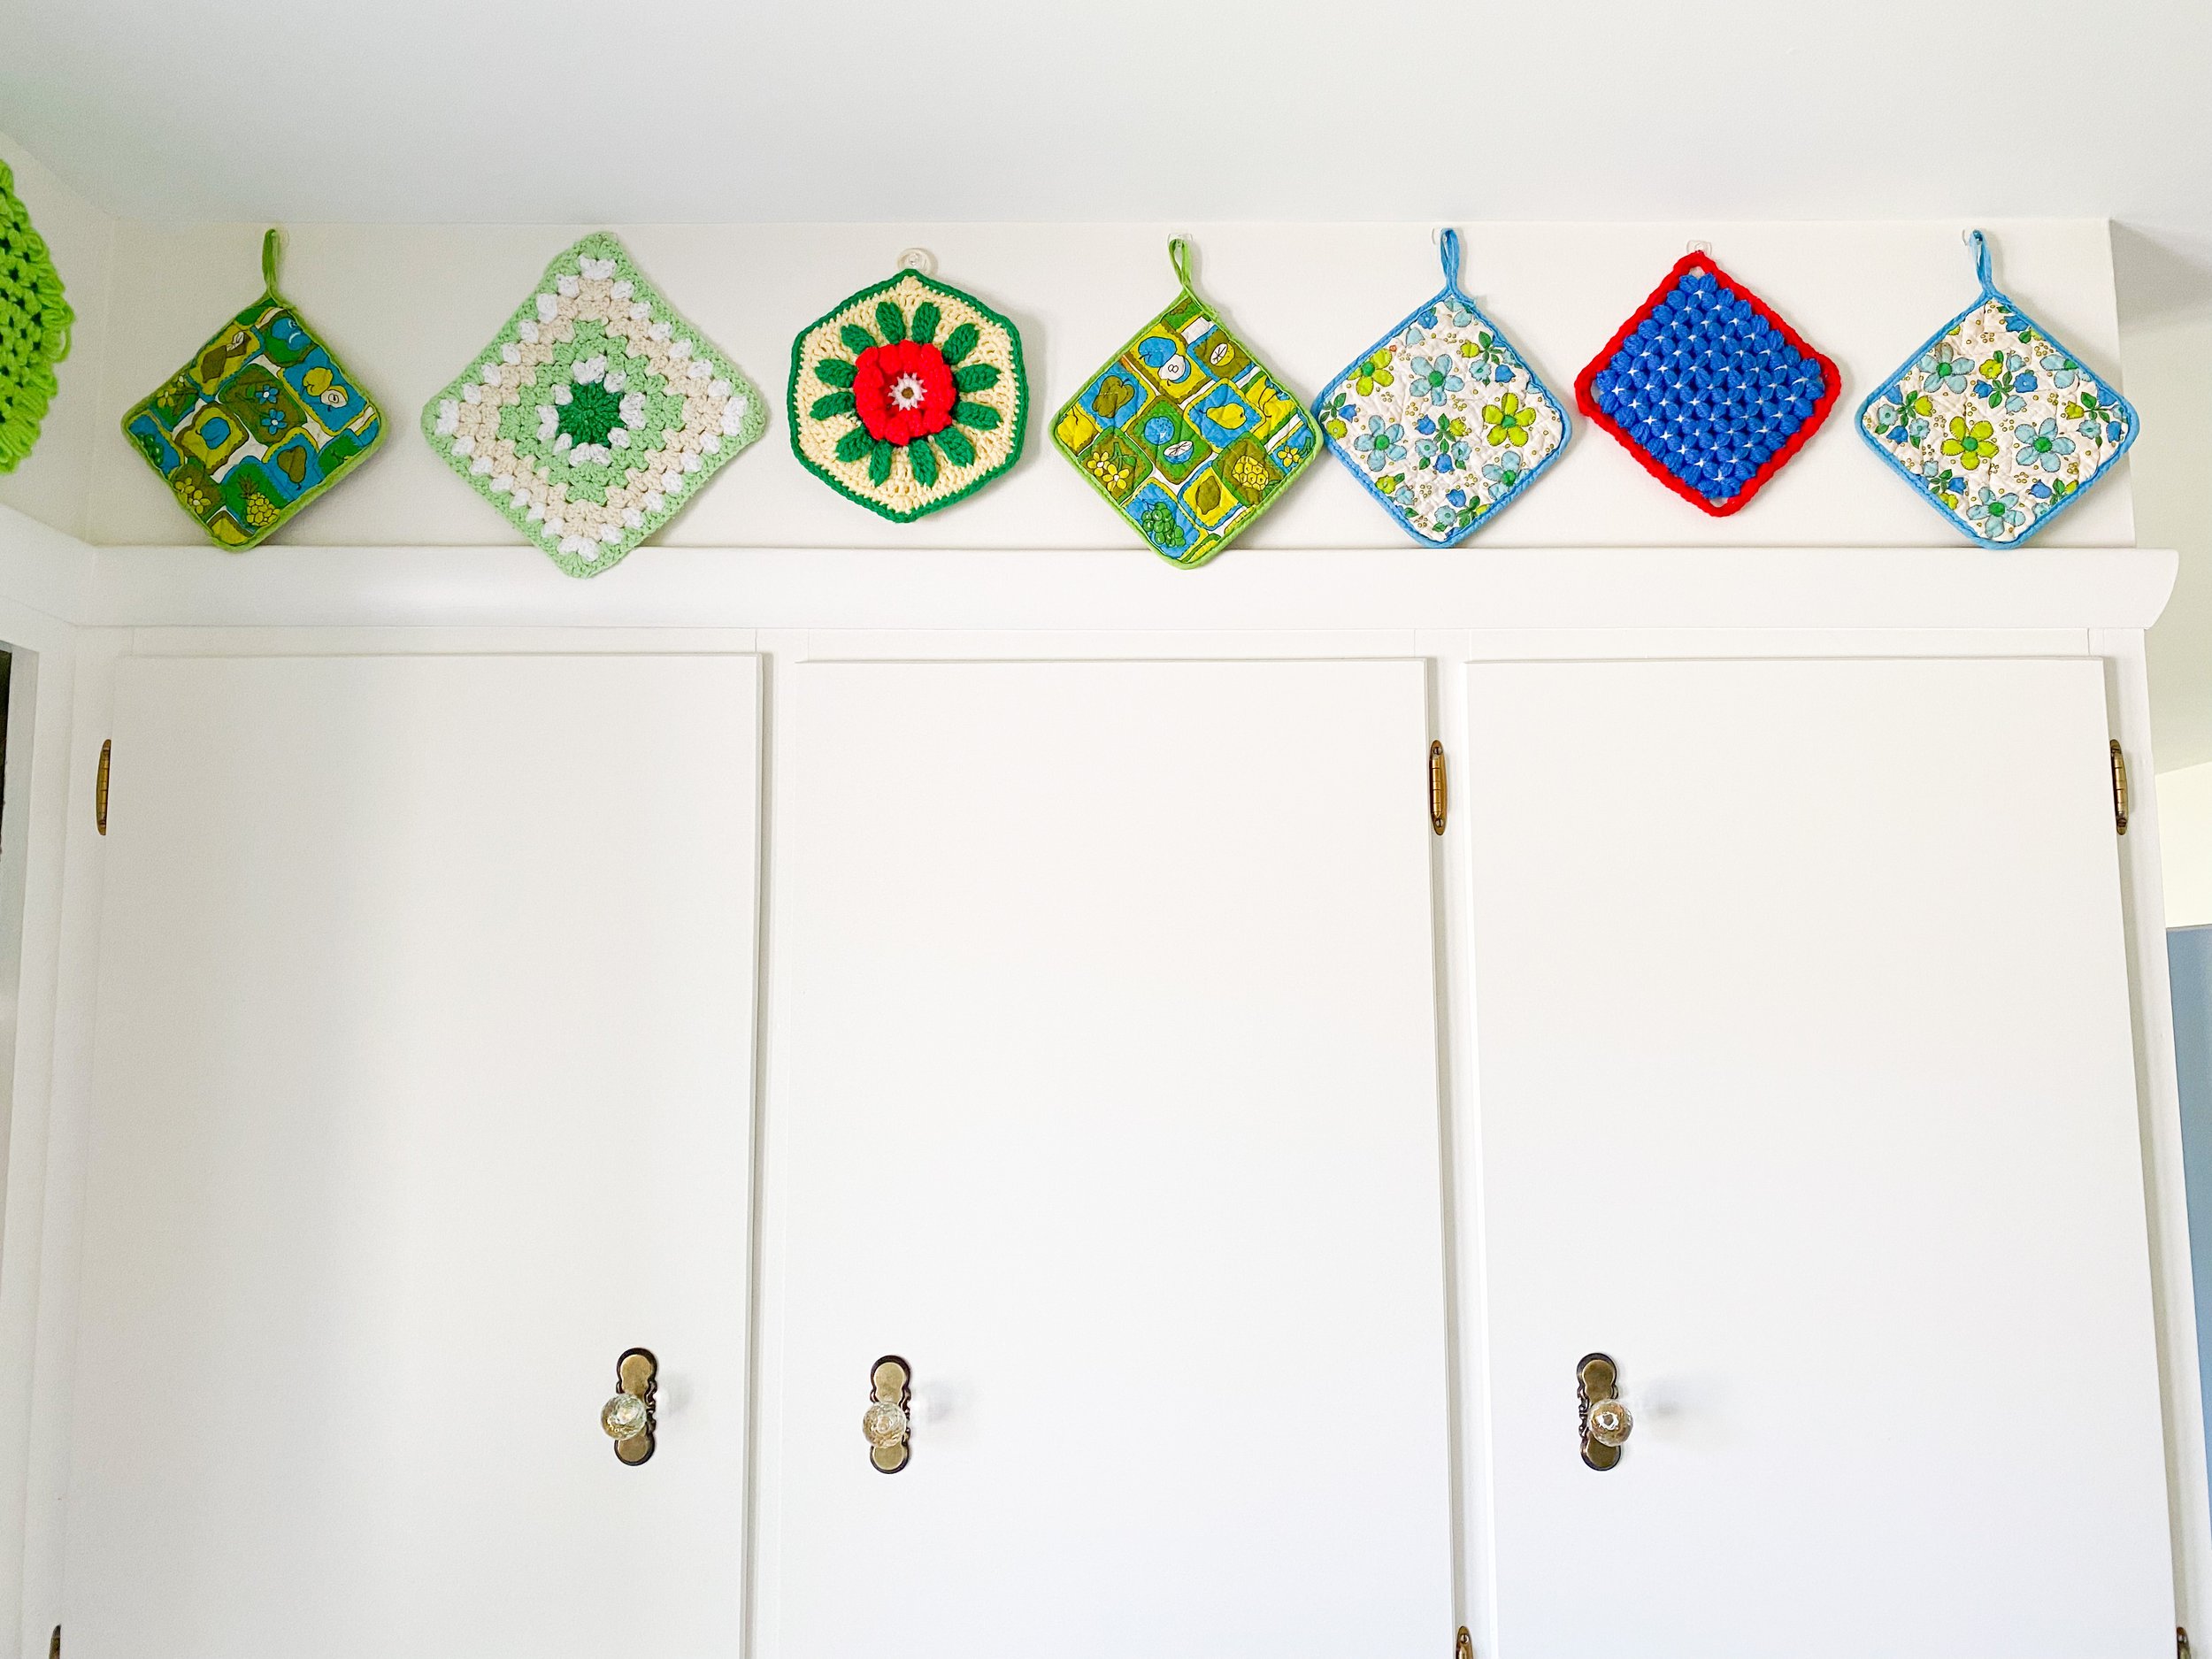 Vintage Pot Holder Kitchen Wall Display Idea — Emily Retro - Vintage and  DIY Home Design